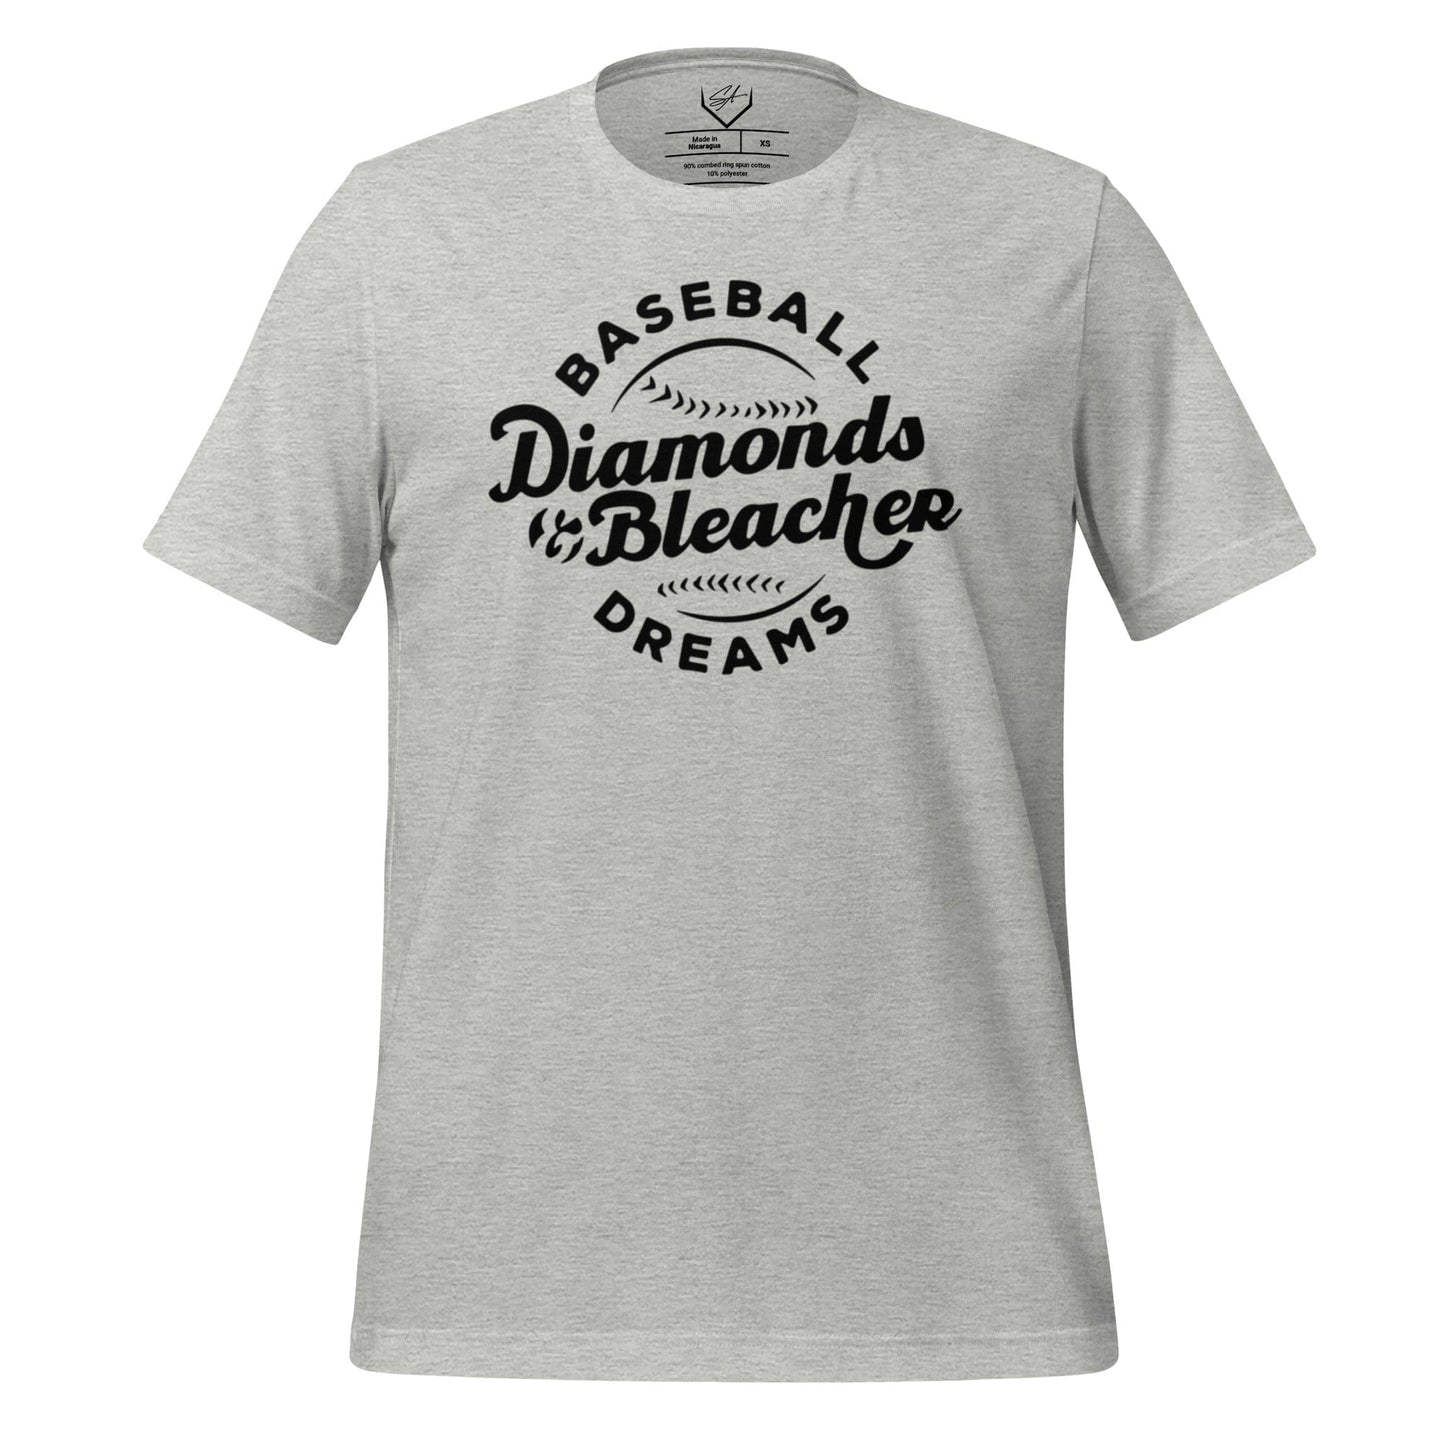 Baseball Diamonds And Bleacher Dreams - Adult Tee